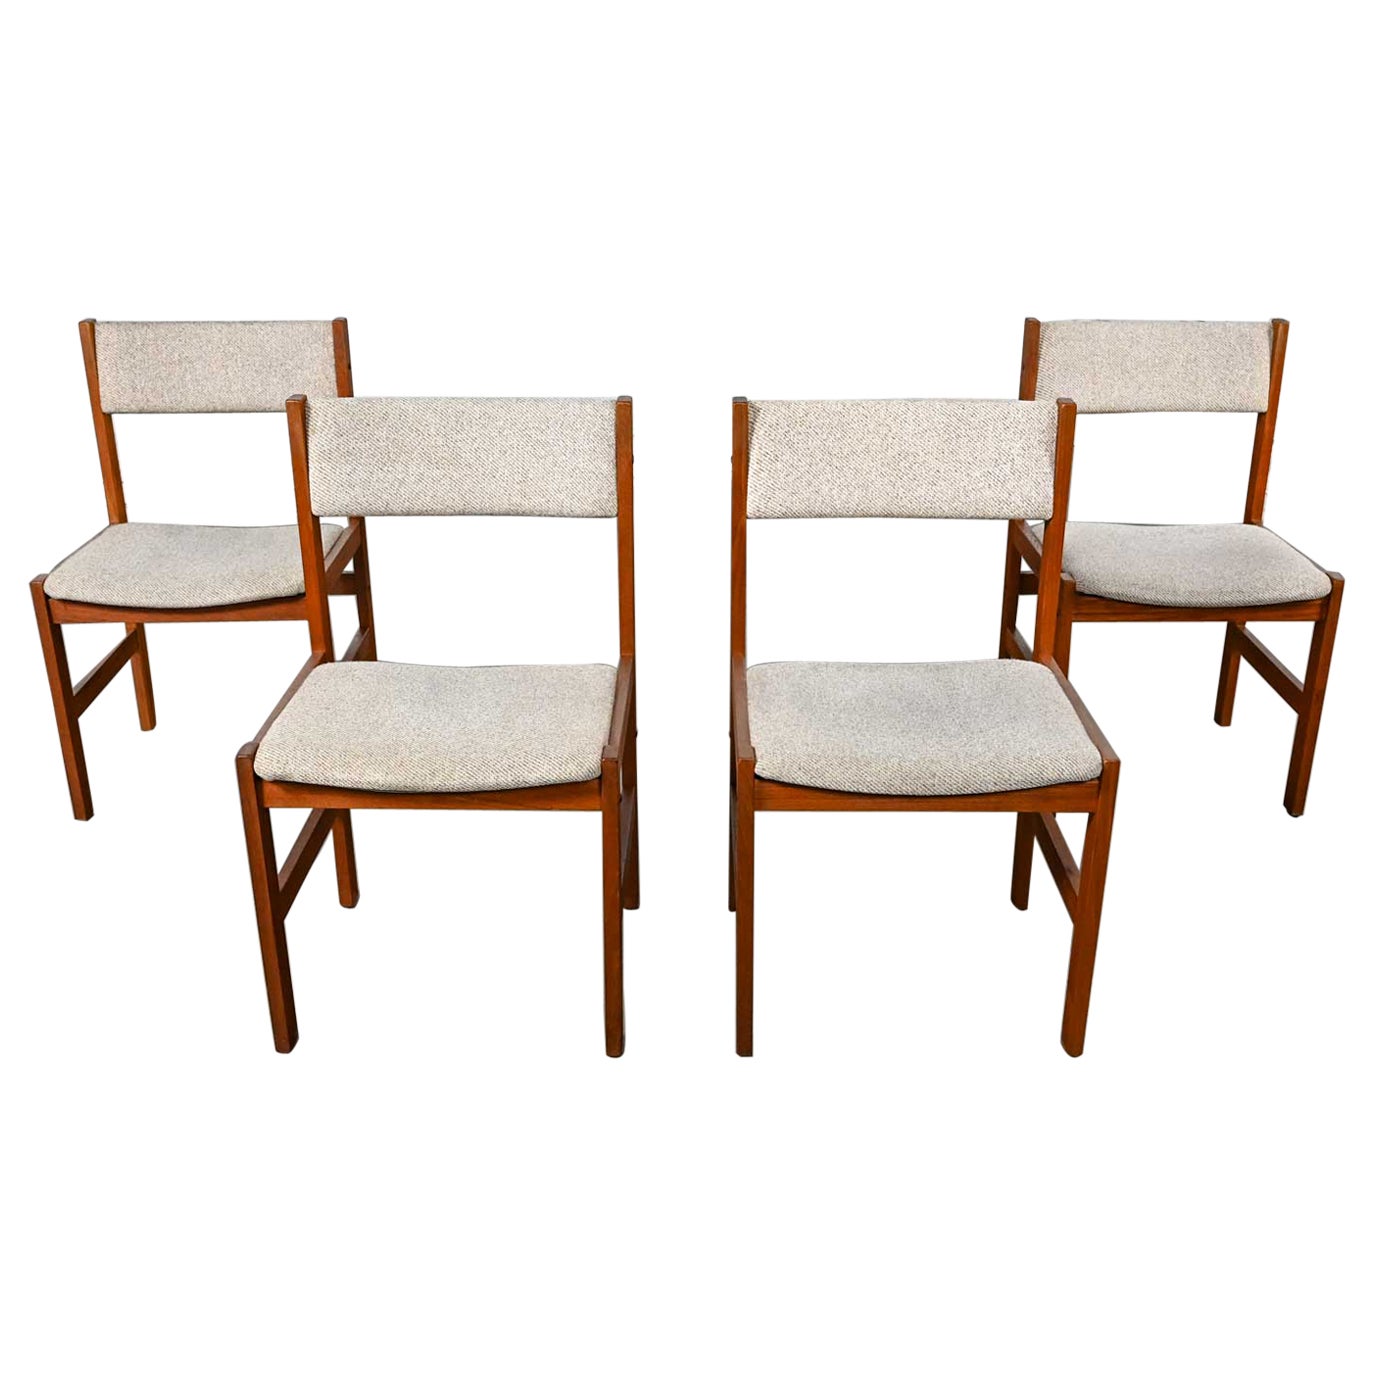 4 Scandinavian Modern Style Sun Furniture Teak & Oatmeal Fabric Dining Chairs For Sale